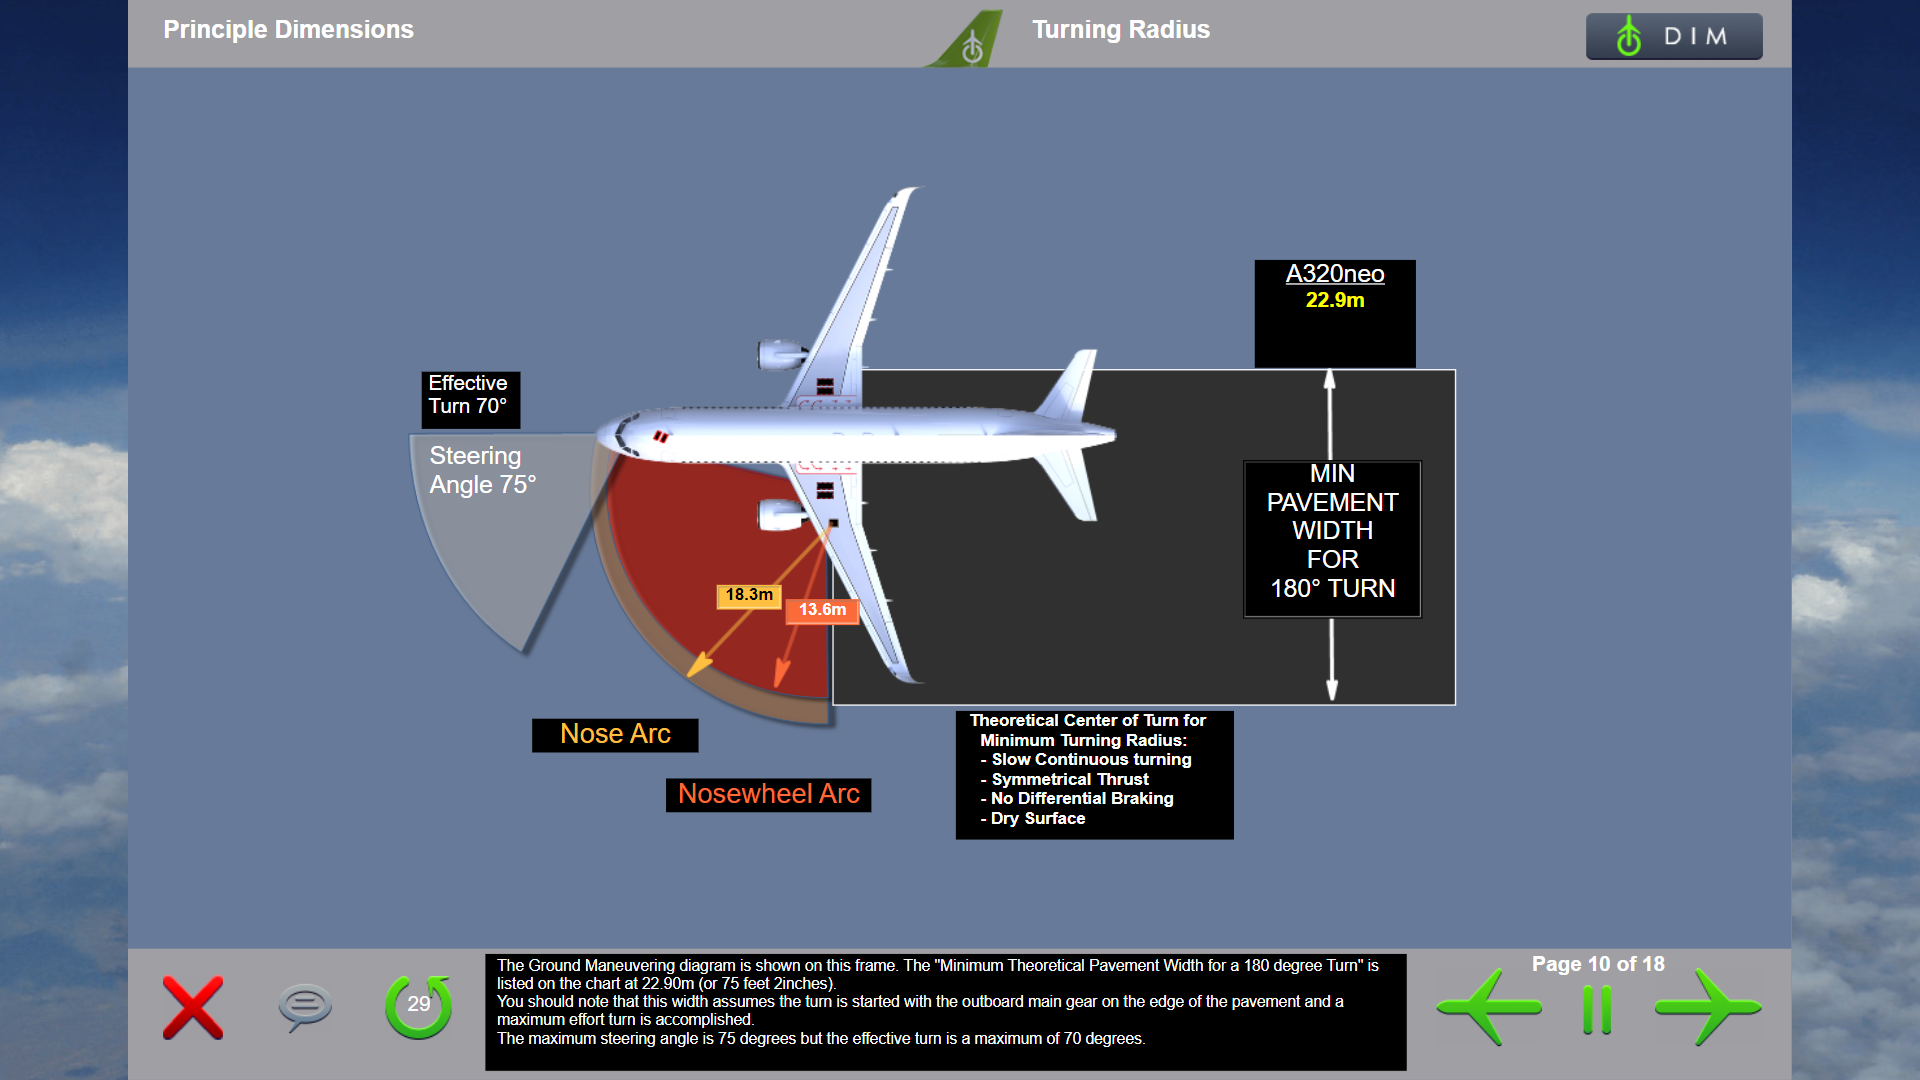 A320neo - turning radius